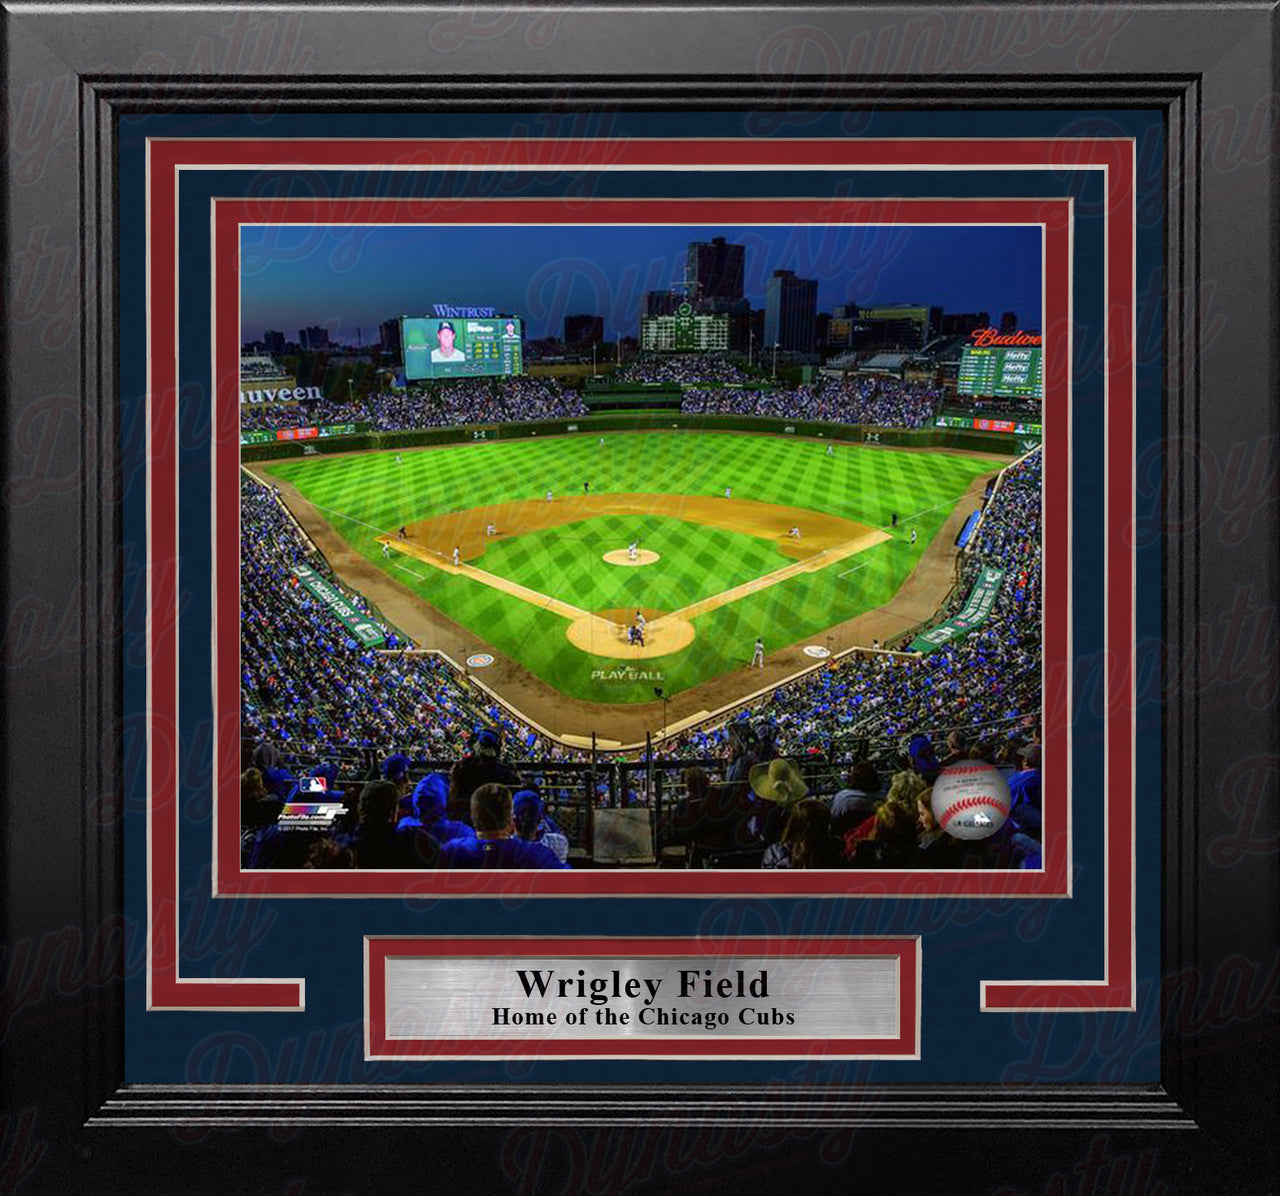 Chicago Cubs Wrigley Field 8" x 10" Framed Baseball Stadium Photo - Dynasty Sports & Framing 